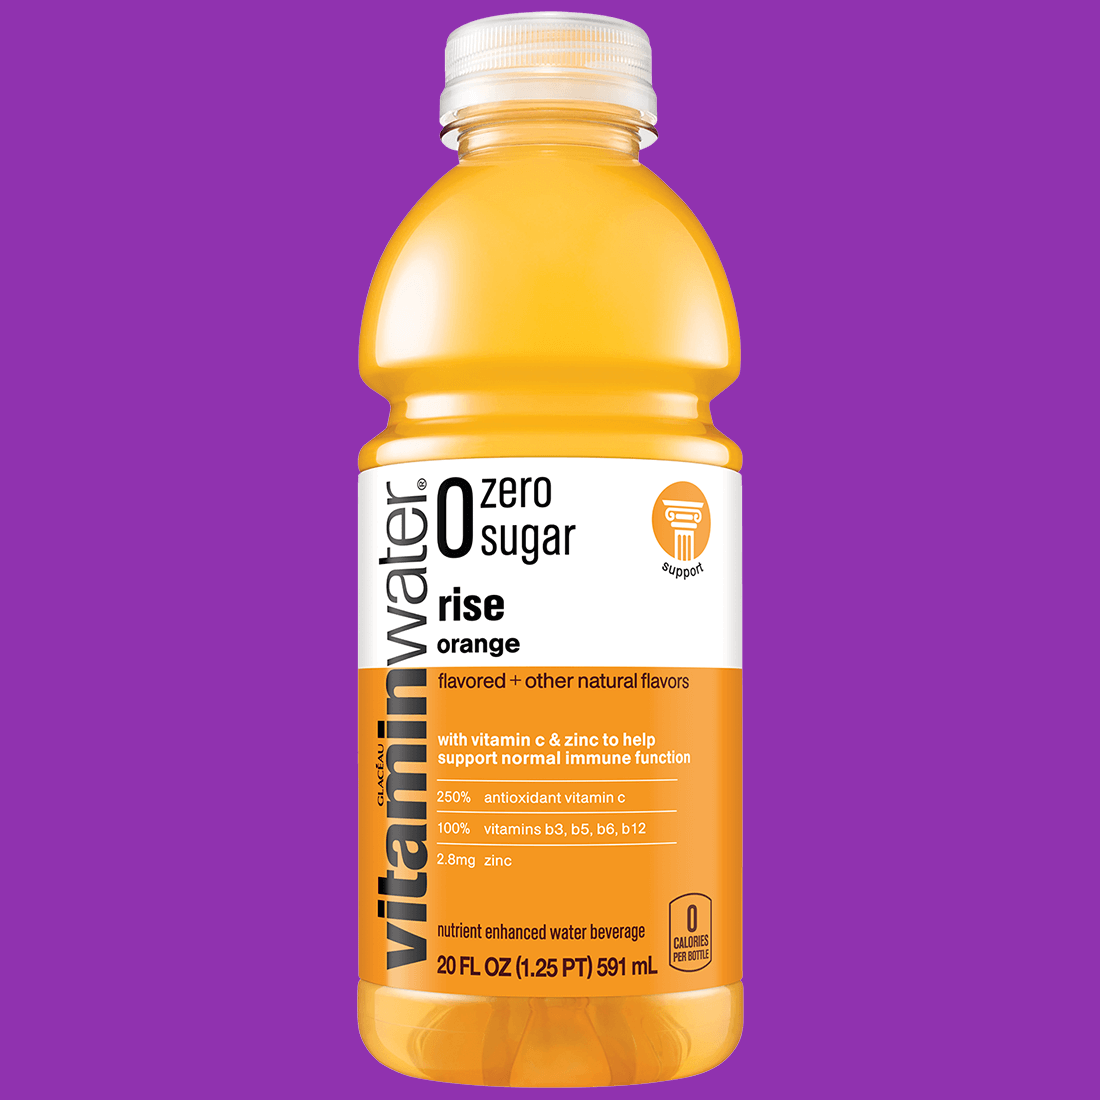 vitaminwater zero sugar rise Bottle, 20 fl oz